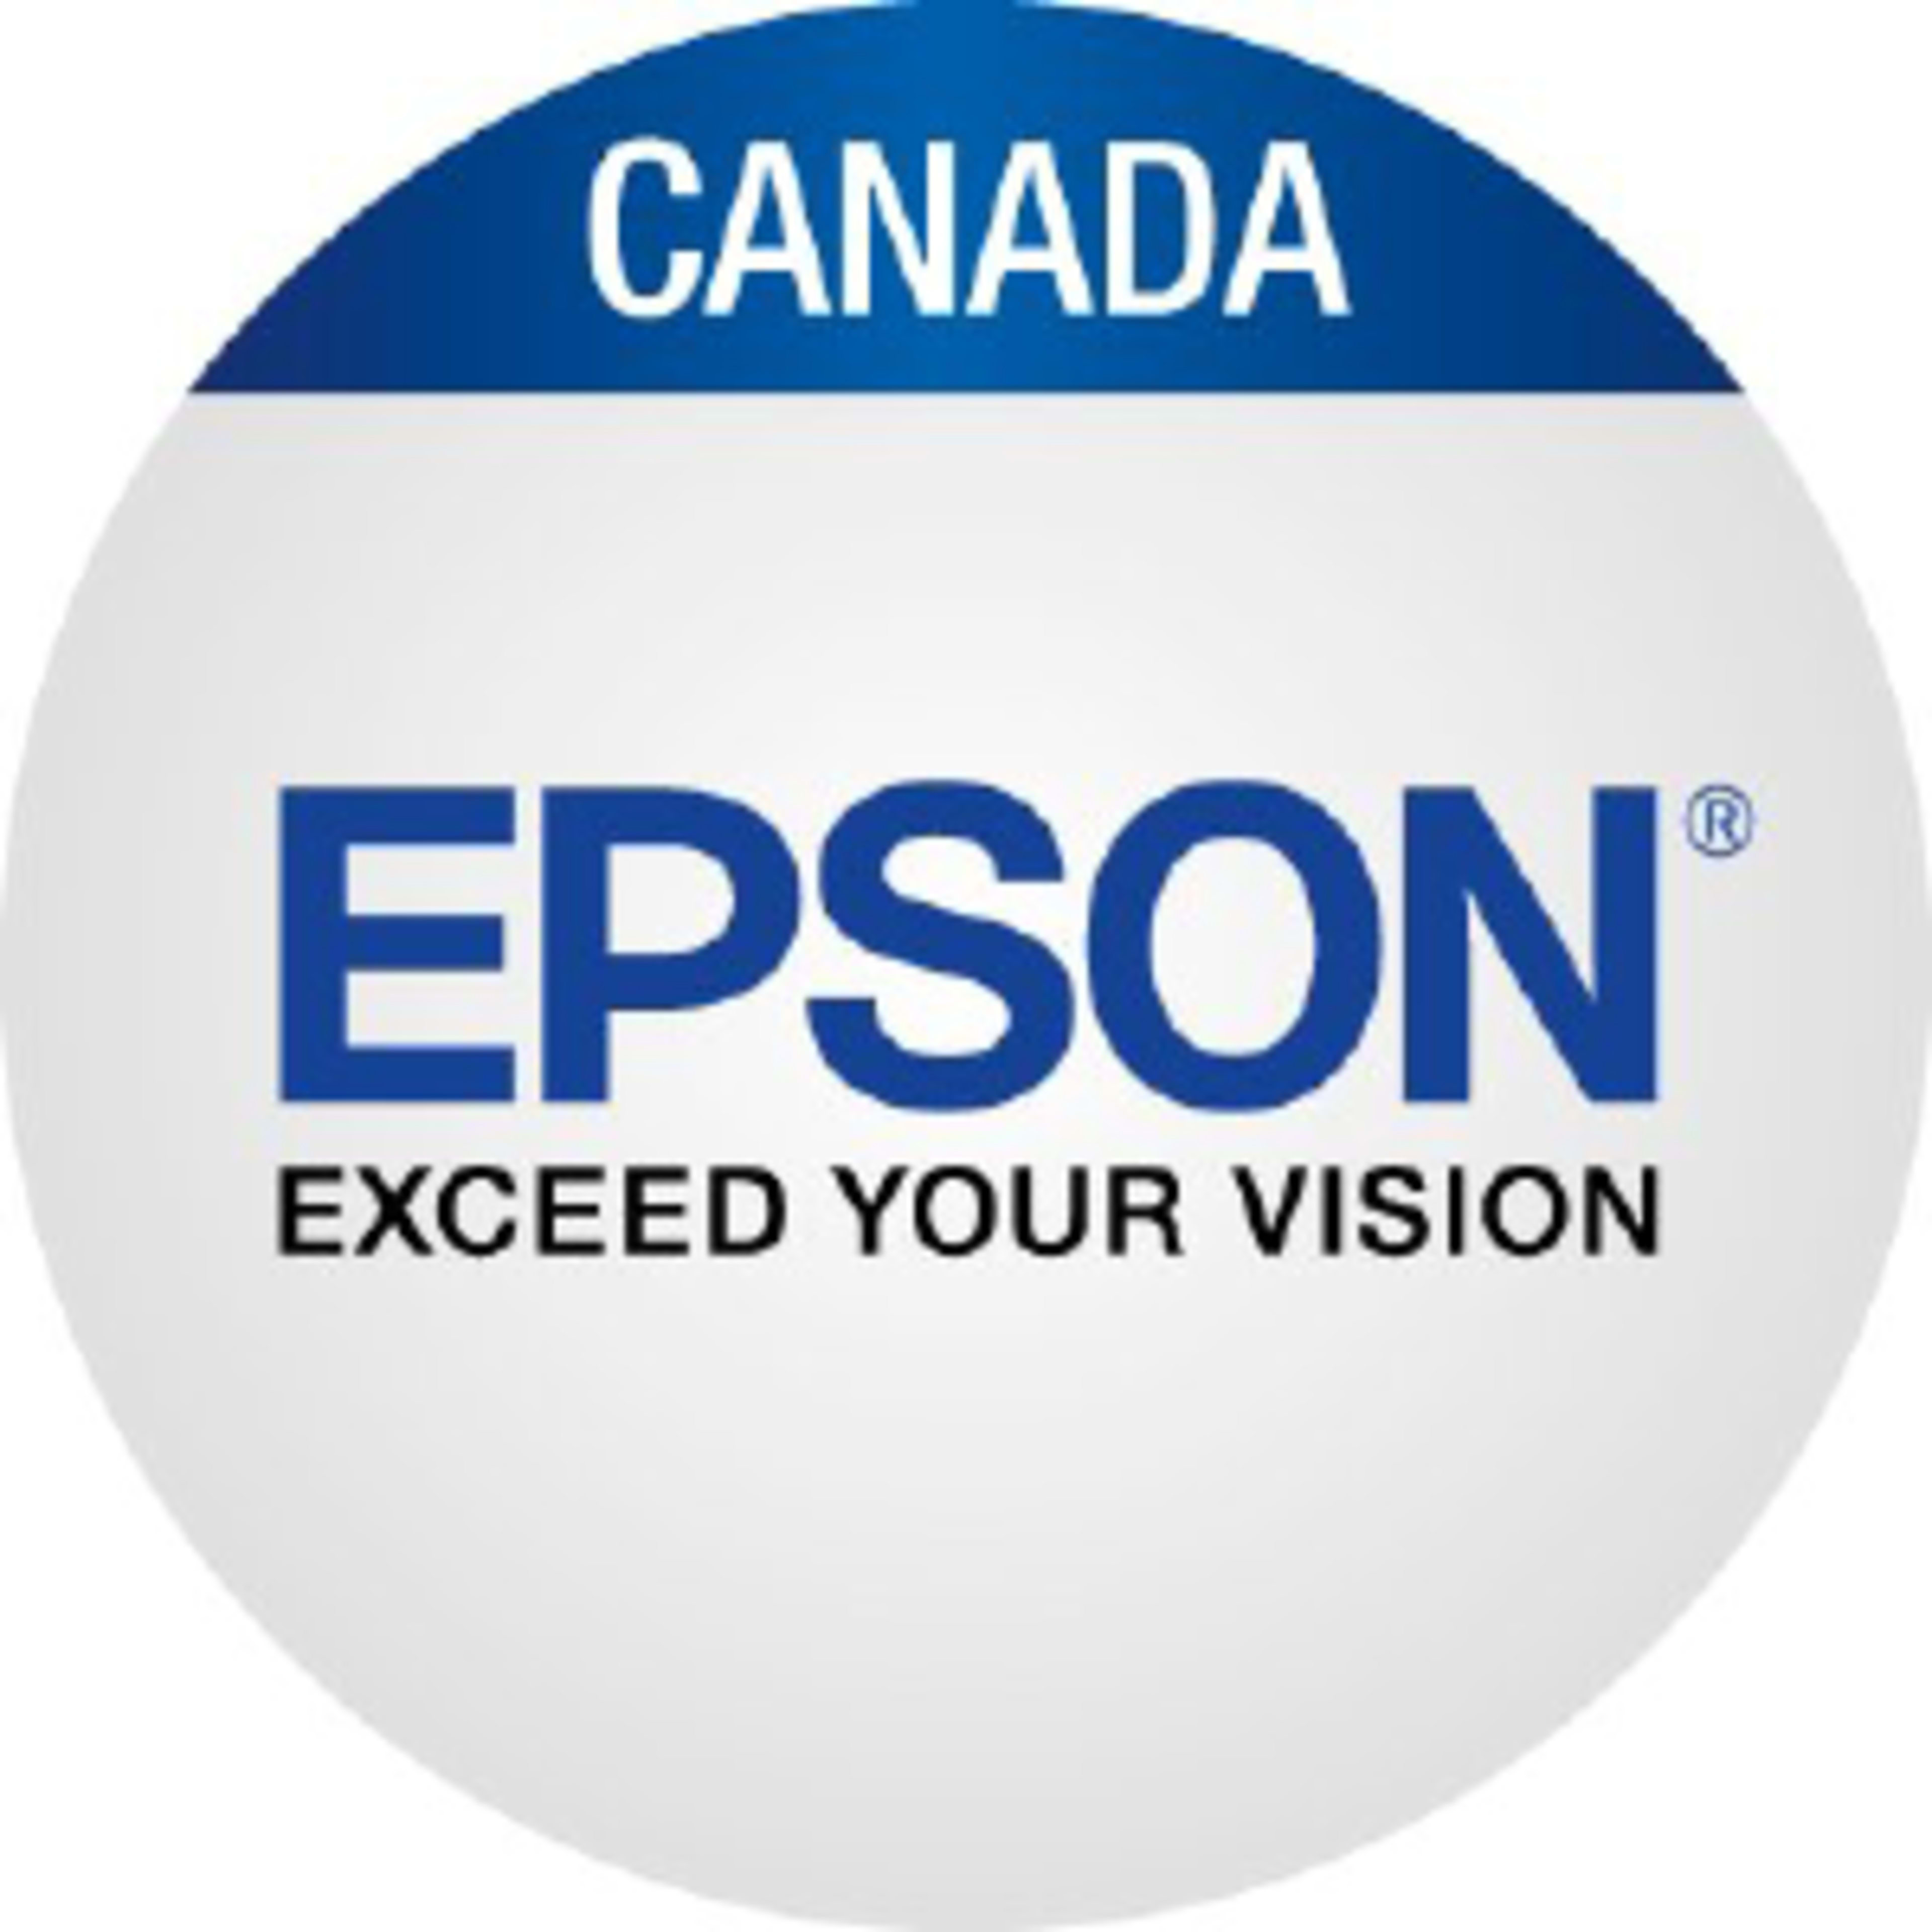 Epson Canada Code